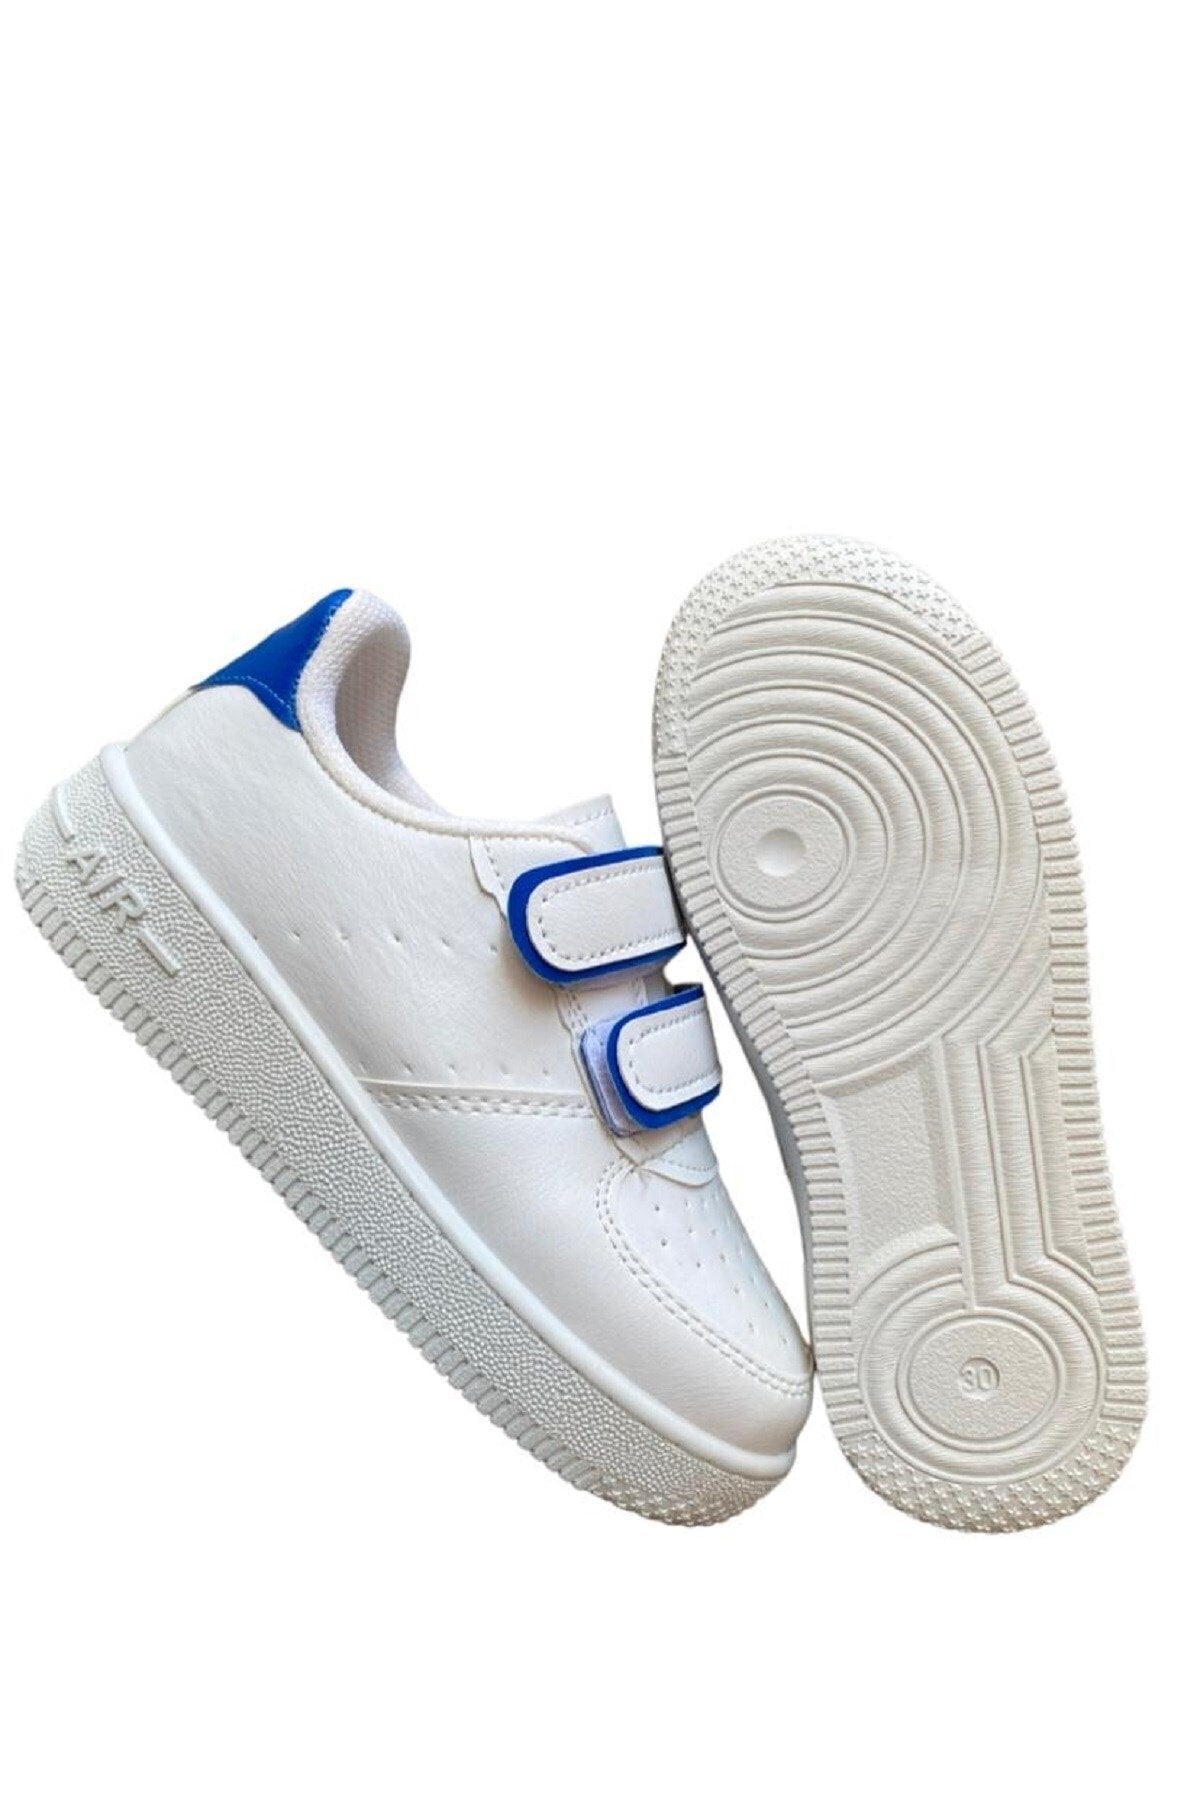 Unisex Girls Boys Velcro Sneakers Sneaker - White Saxs